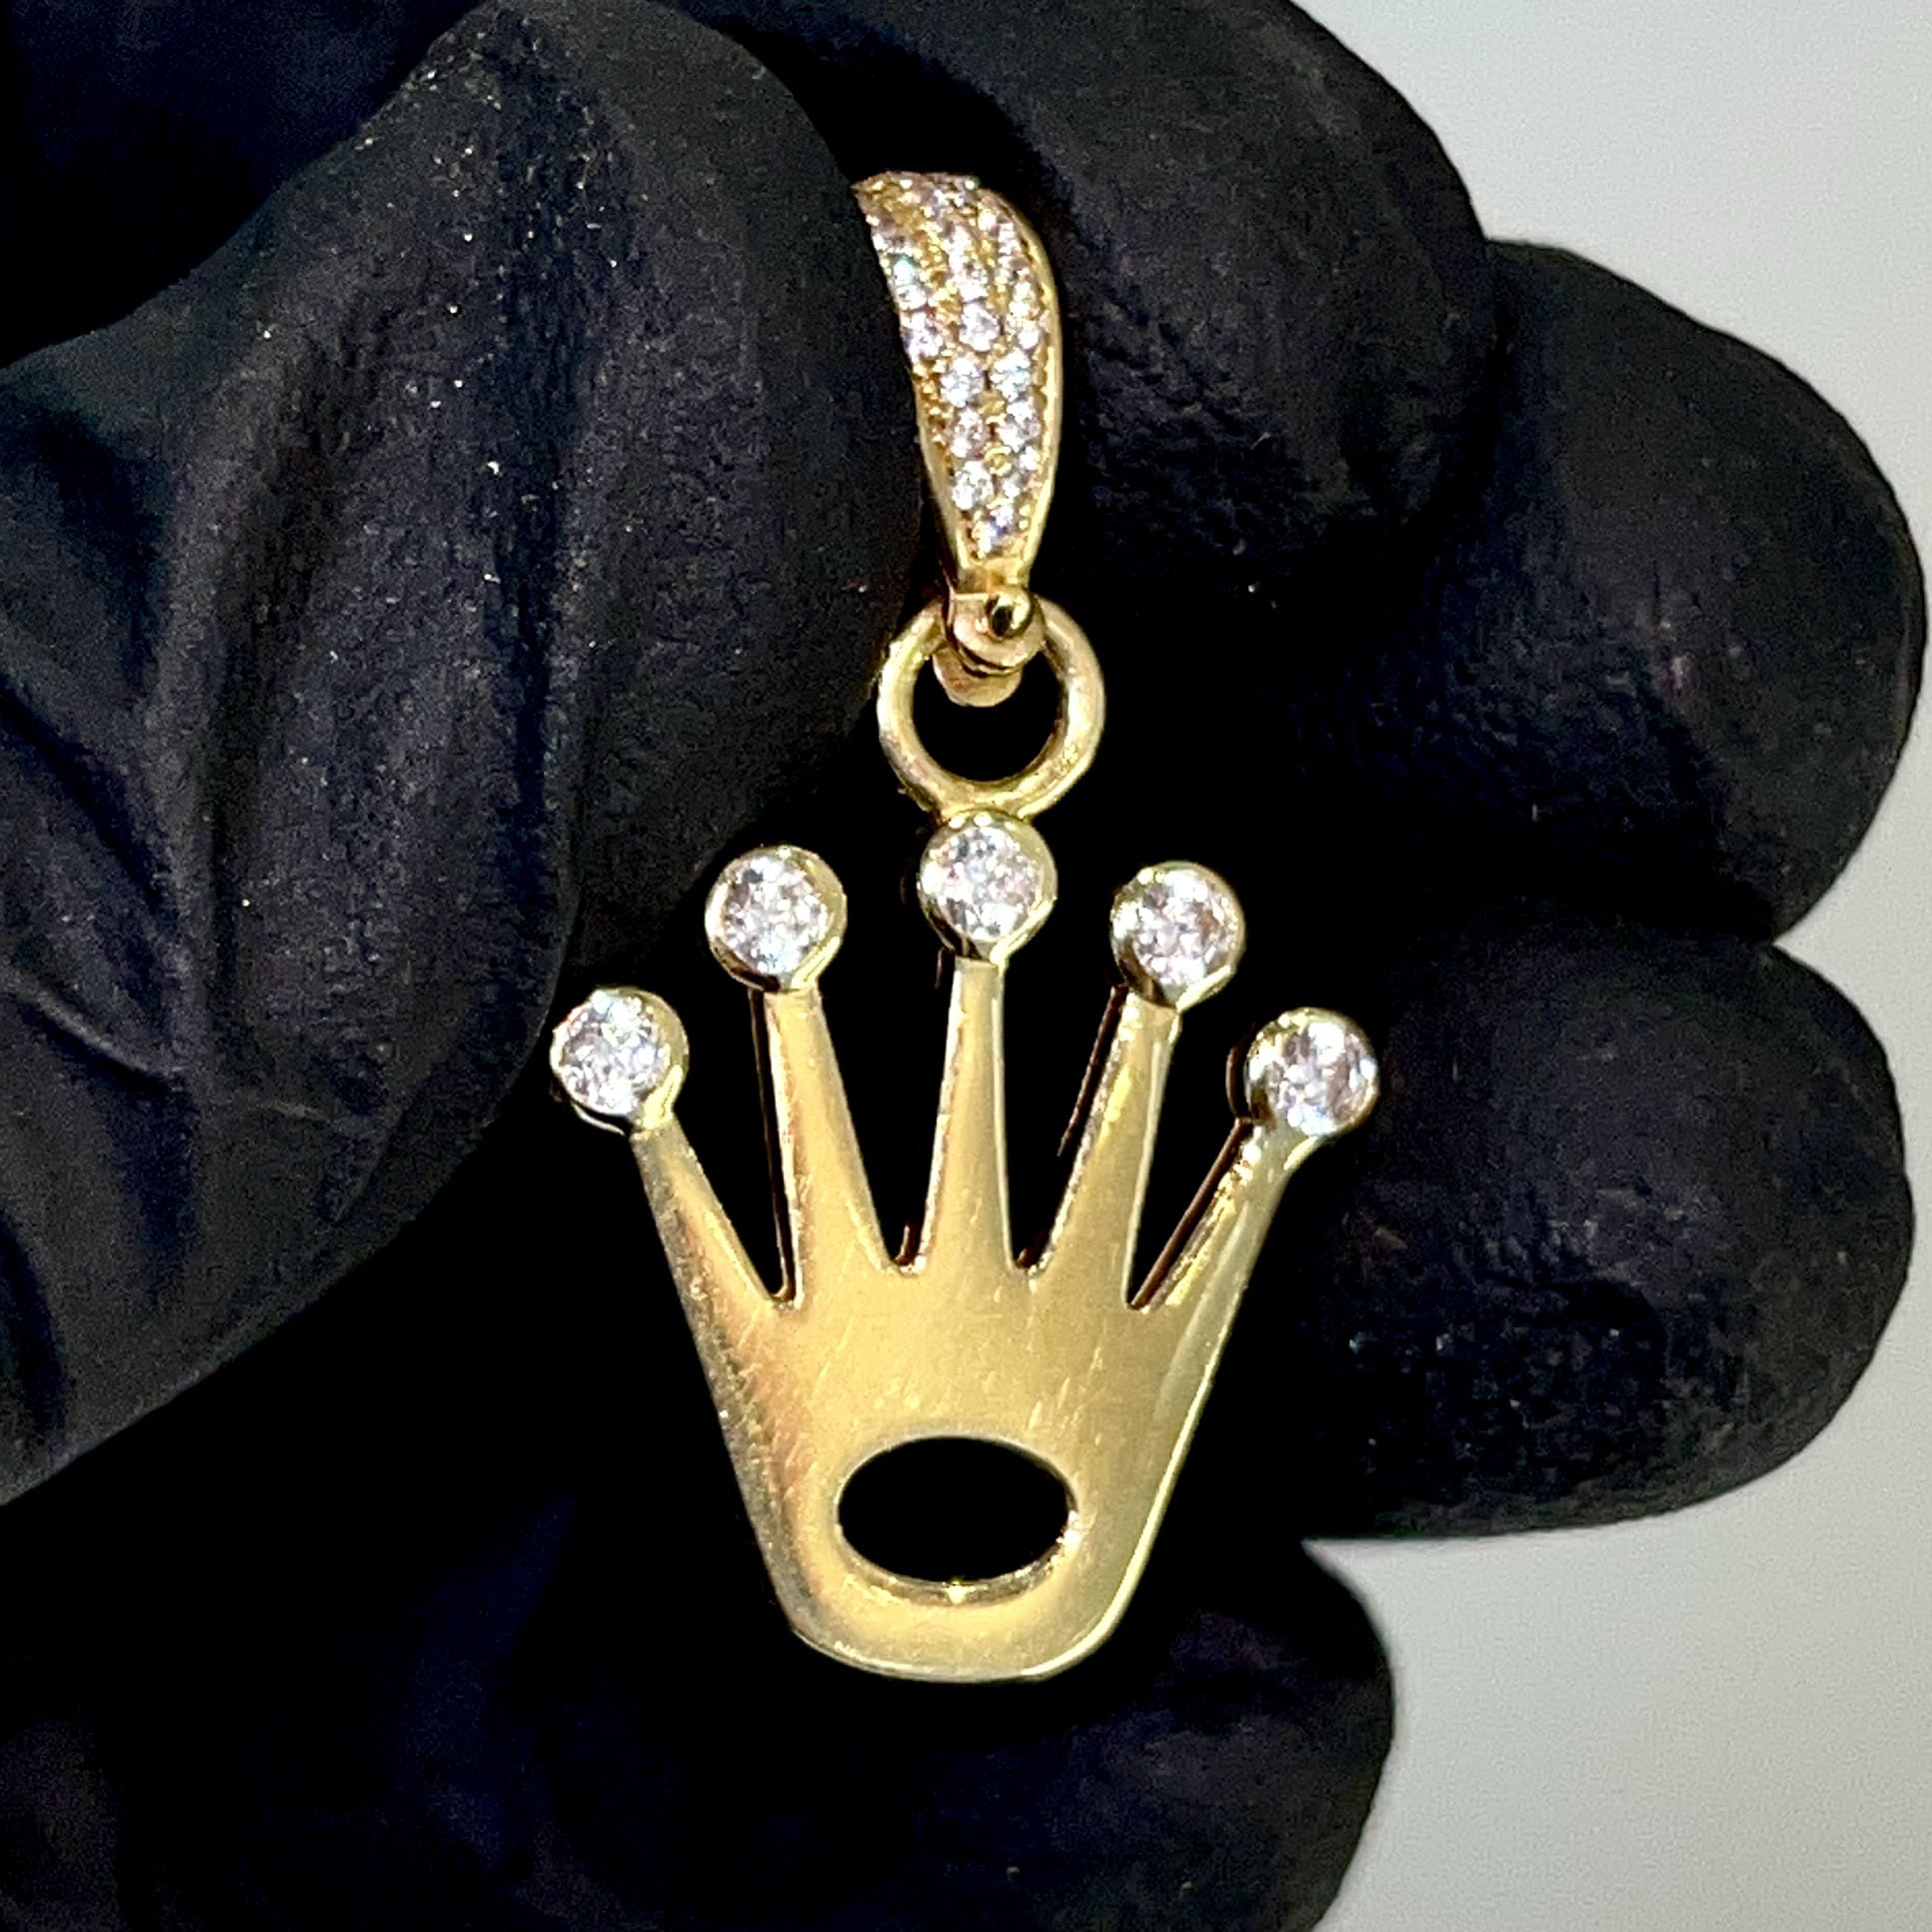 Crown Pendant - 18 Carat Gold - 284